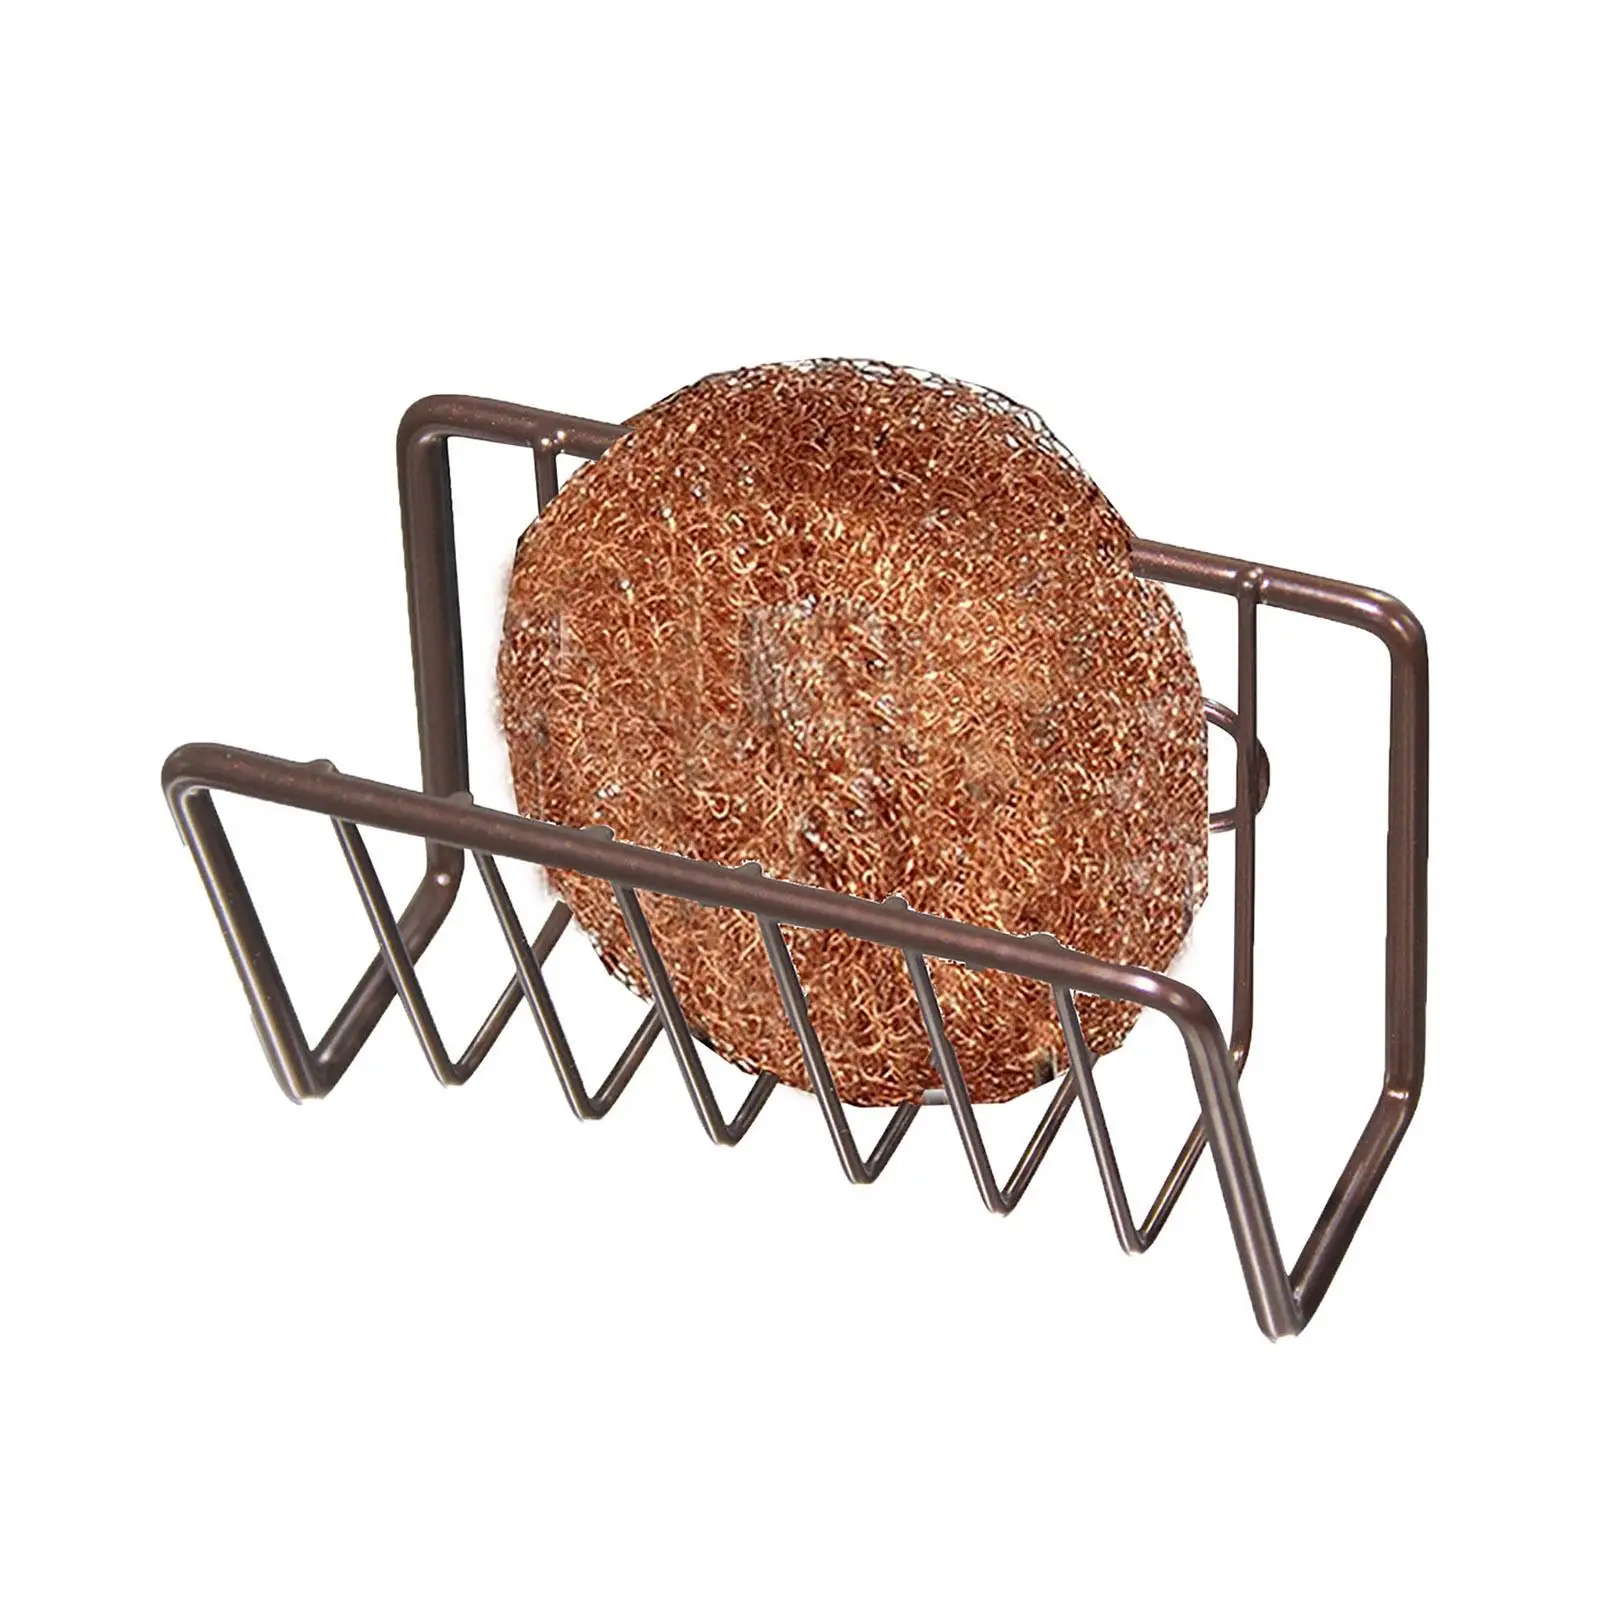 Iron Sponge Holder Suction Sink Basket Soap Shelf for Scrubbers Sink Kitchen Soap Bathroom